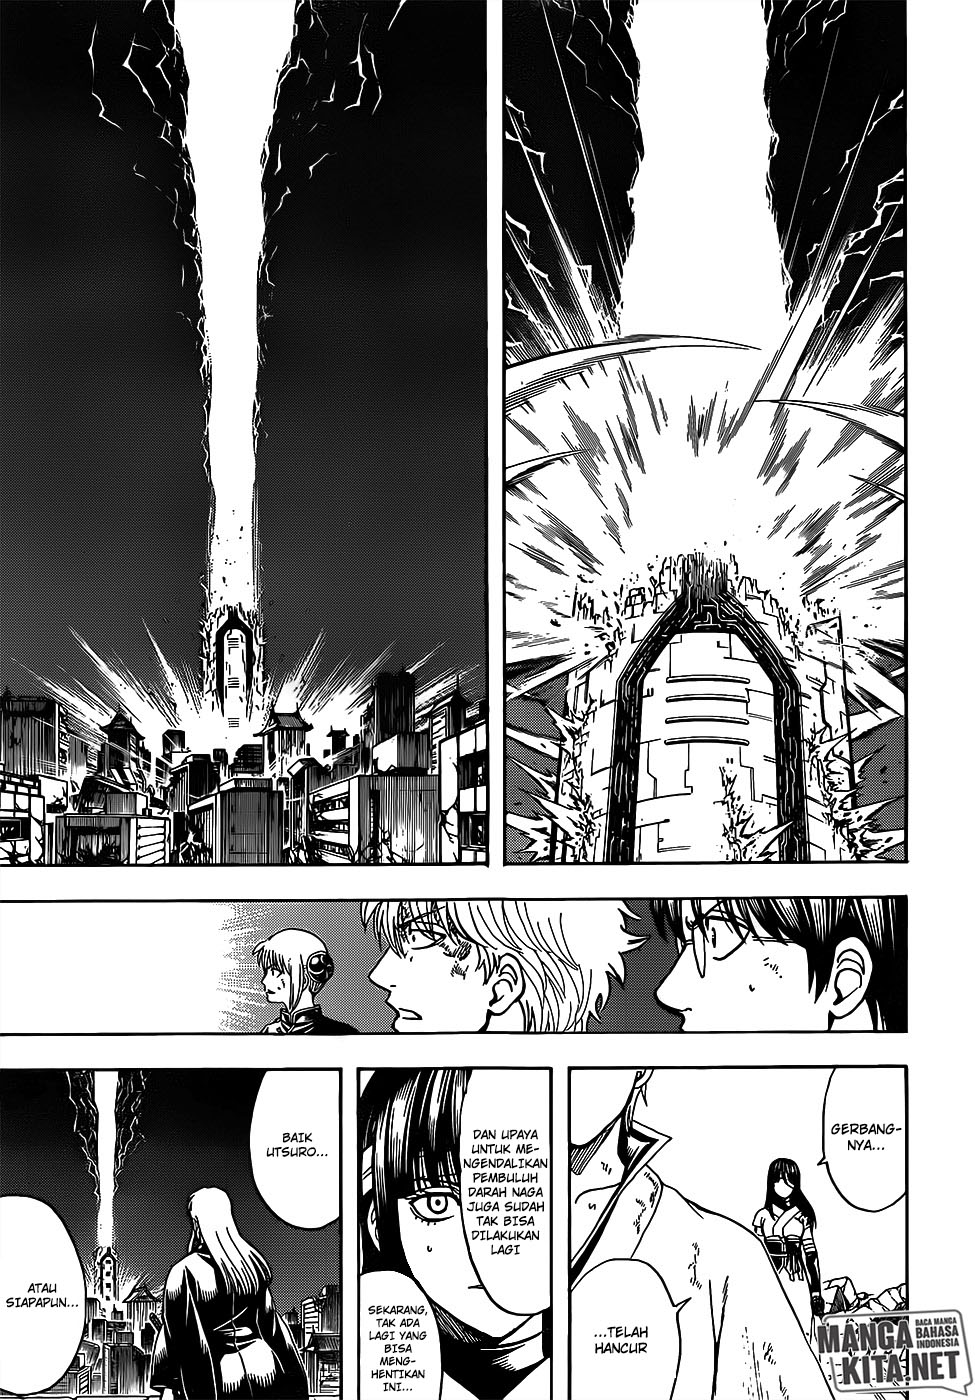 Gintama Chapter 654